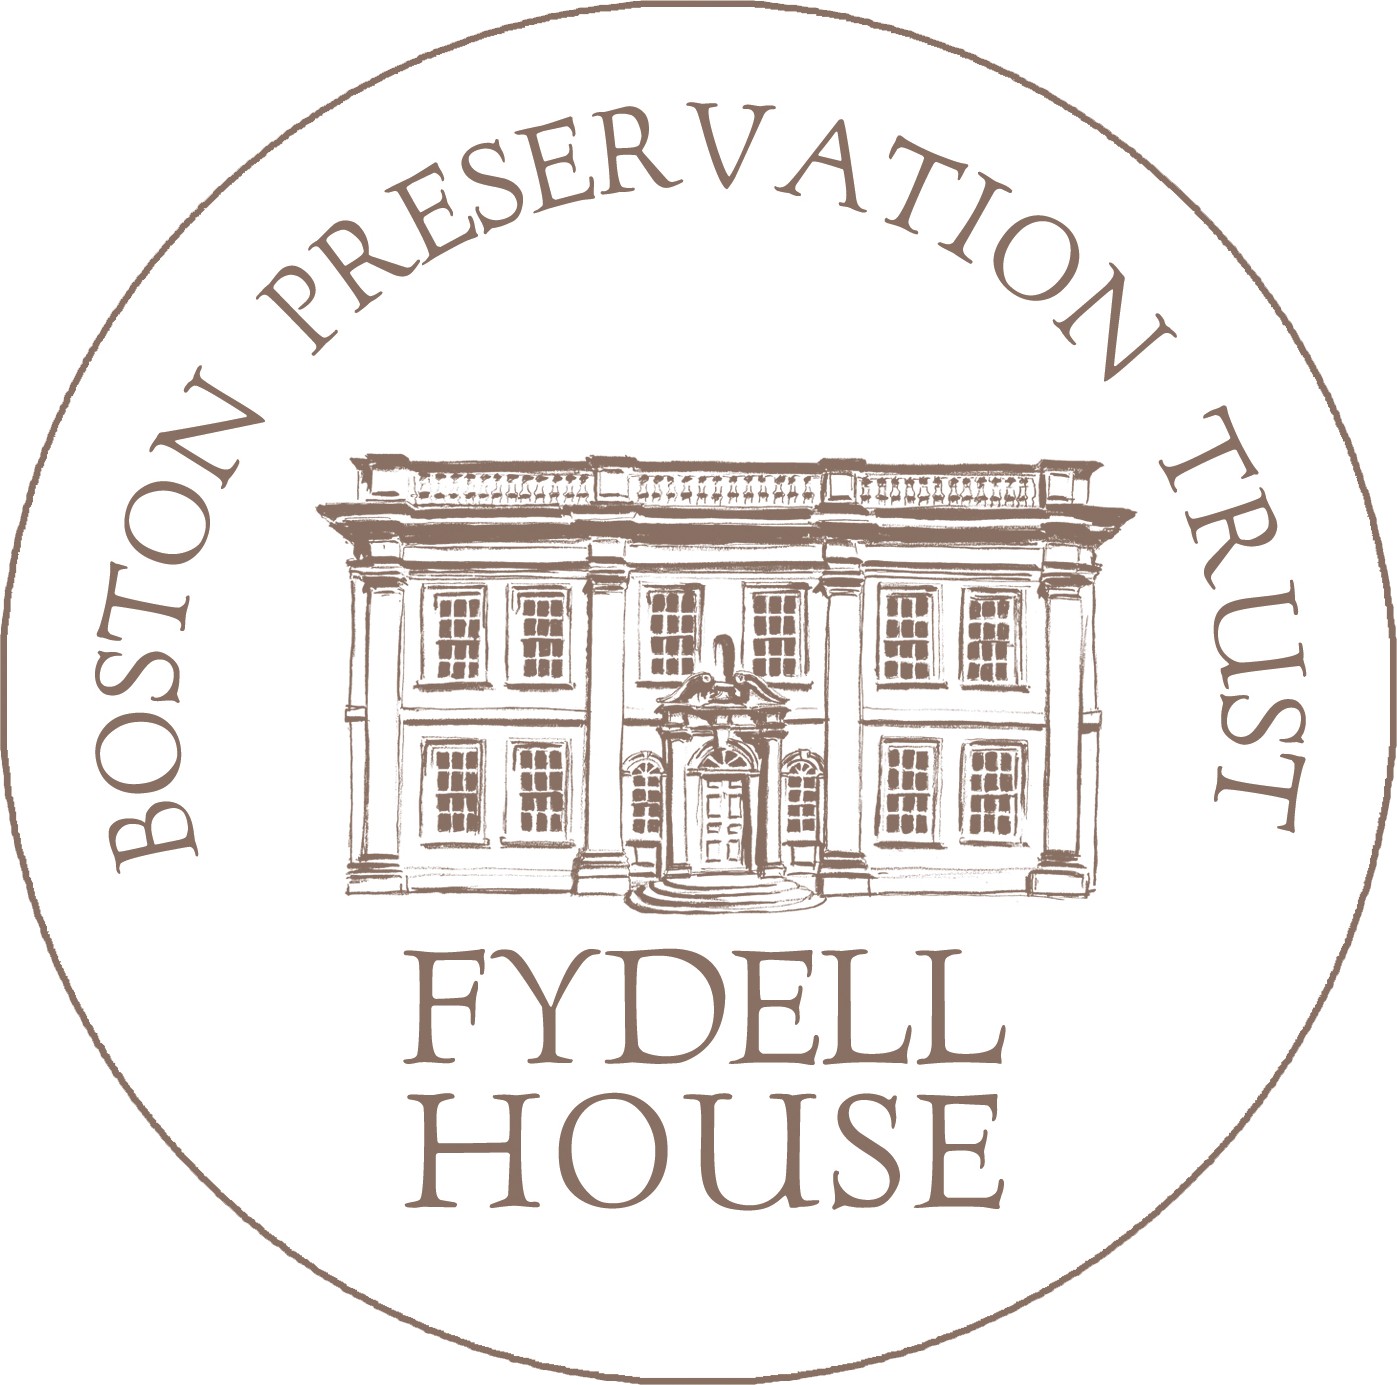 Fydell House